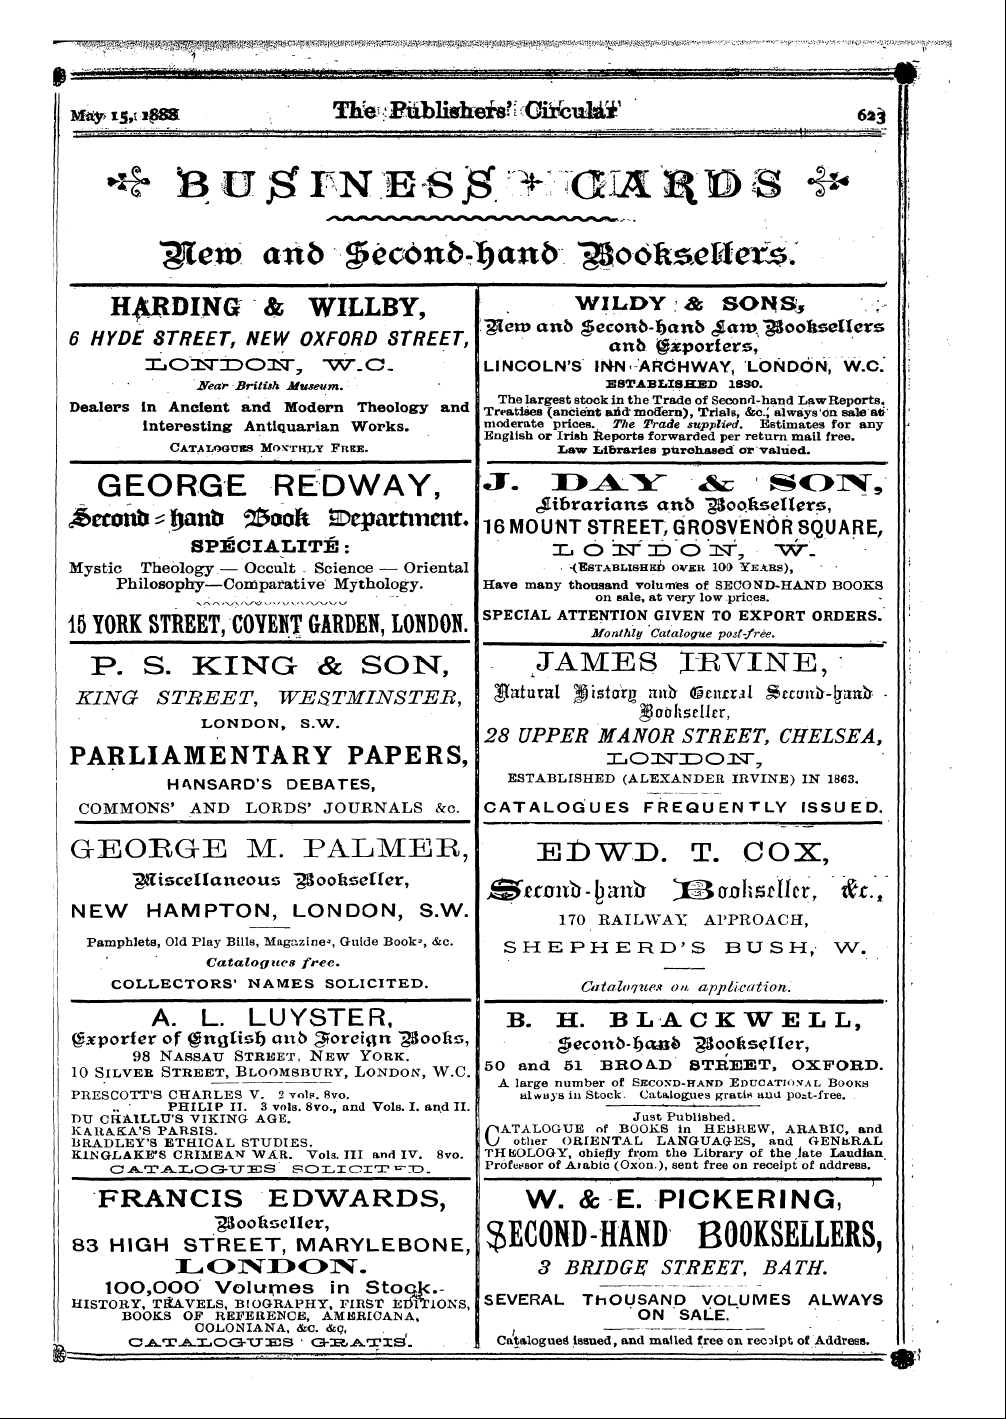 Publishers’ Circular (1880-1890): jS F Y, 1st edition - Ad12508